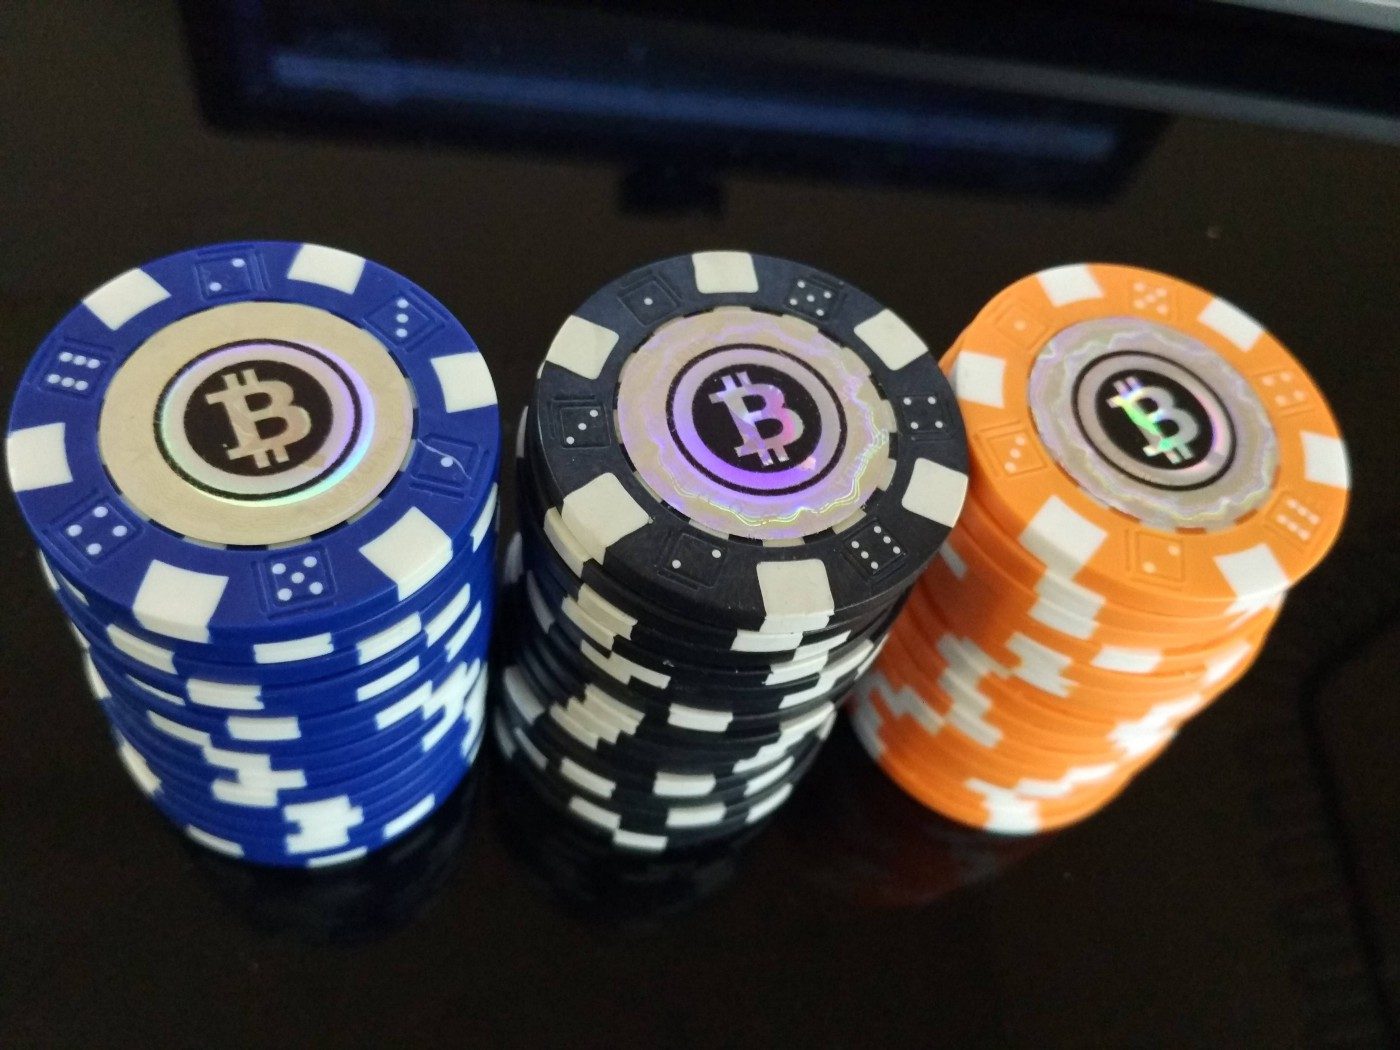 btc poker blog themes